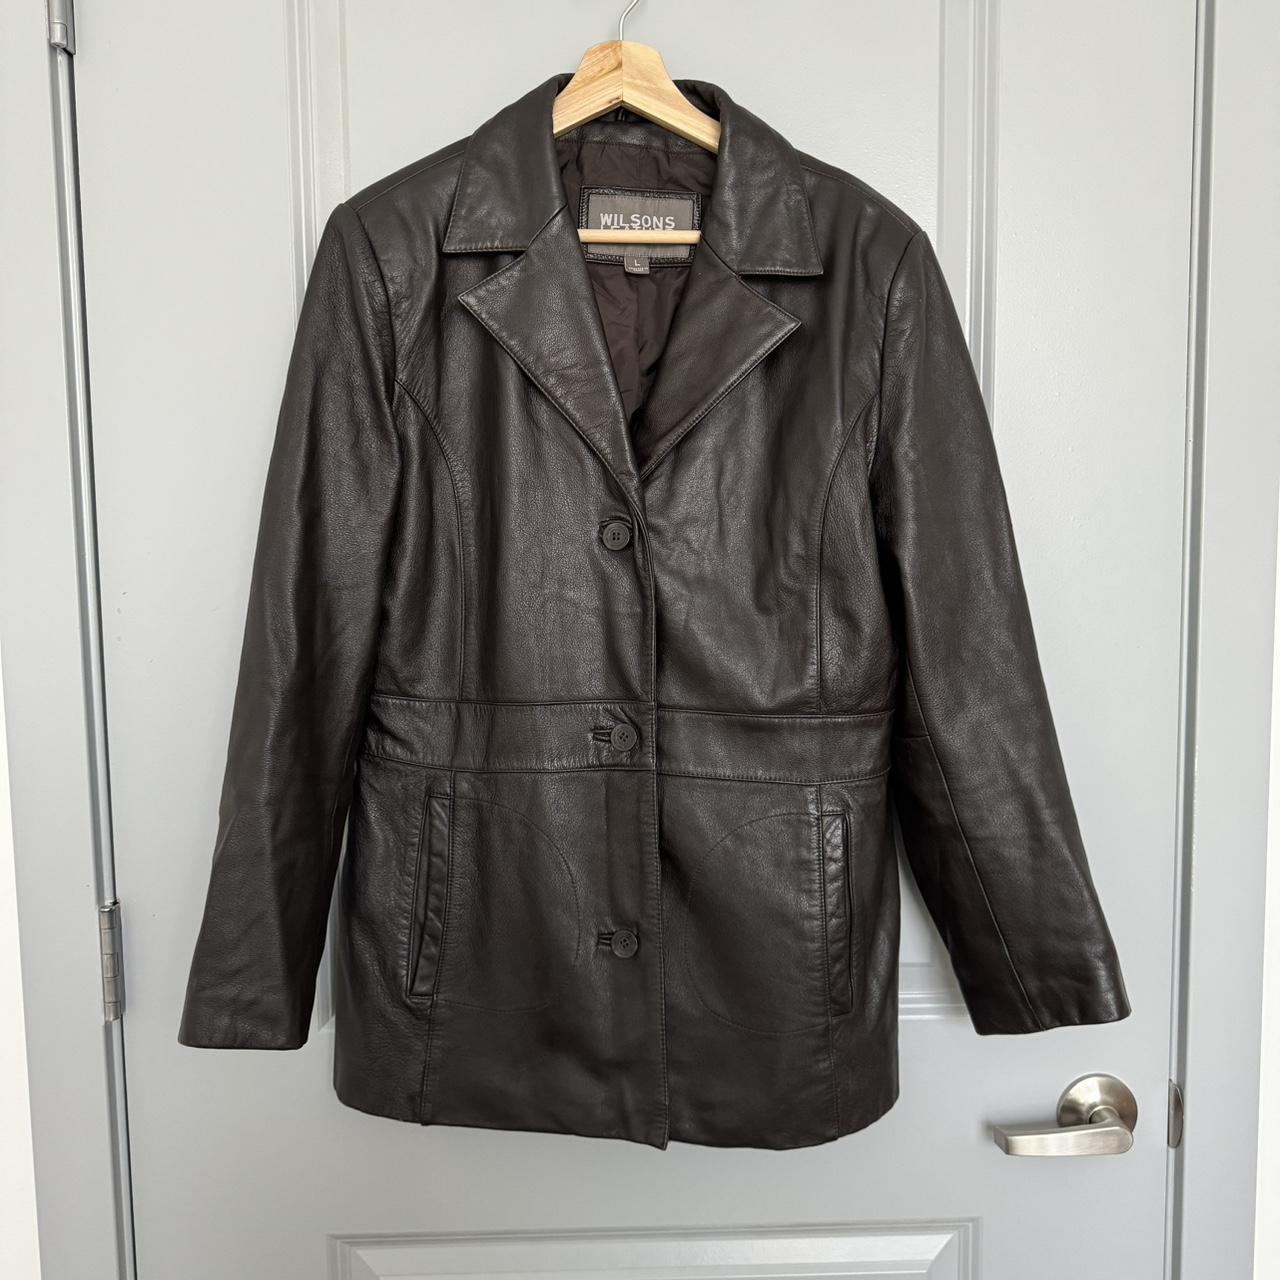 Vintage 1986 Wilsons Leather Jacket. Great used... - Depop